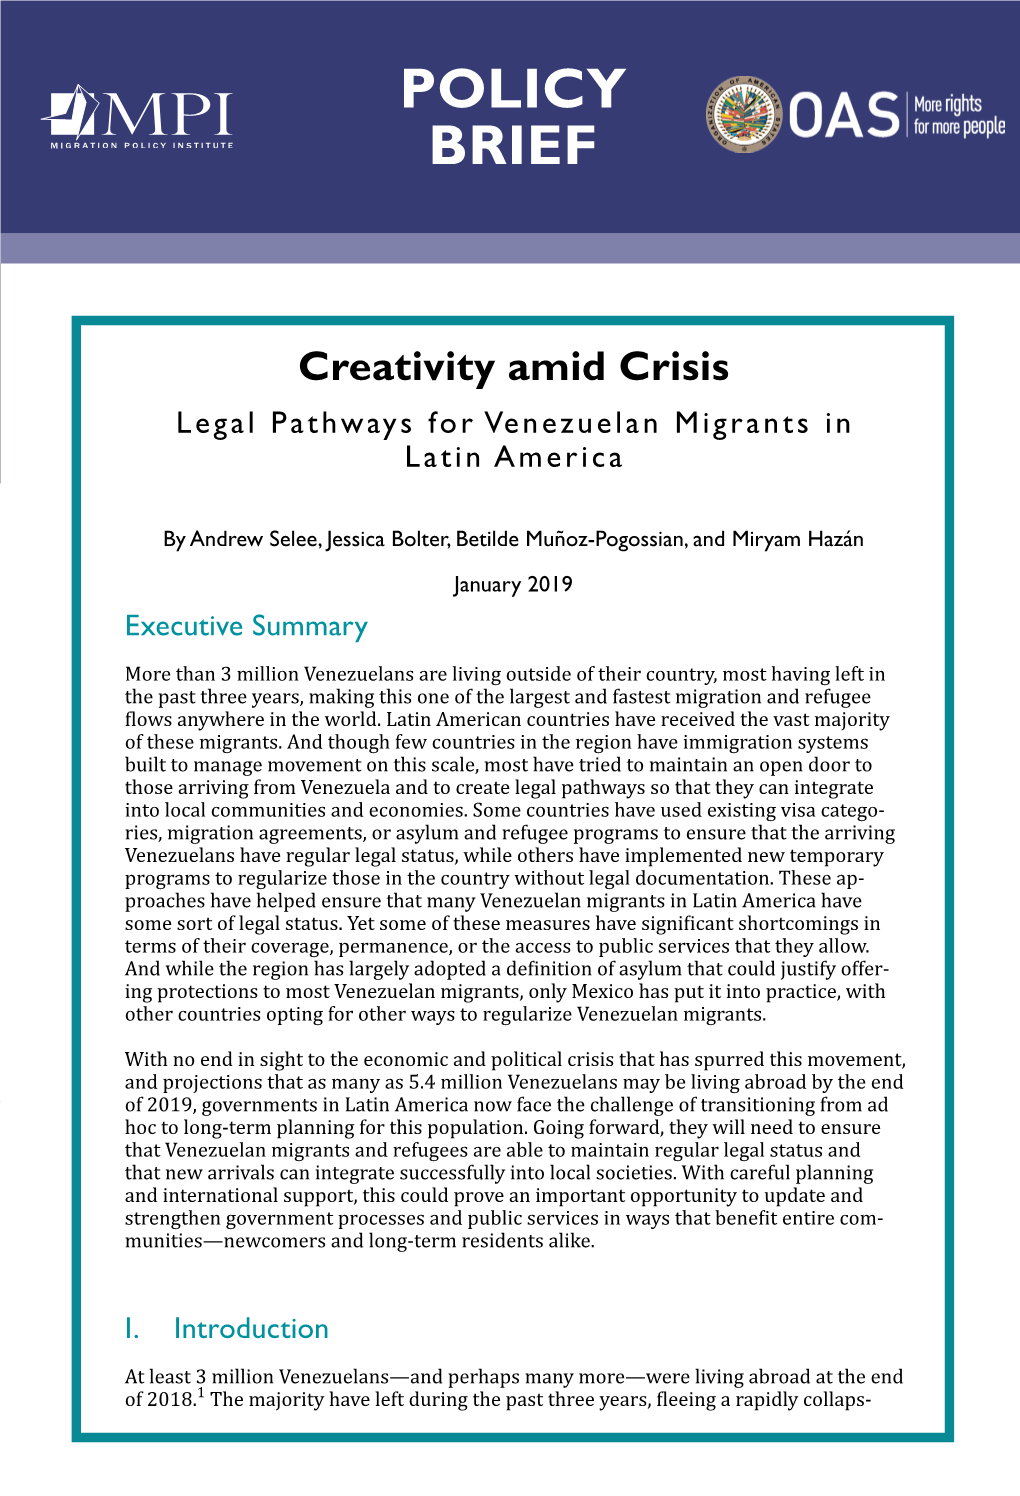 Creativity Amid Crisis: Legal Pathways for Venezuelan Migrants in Latin America Policy Brief